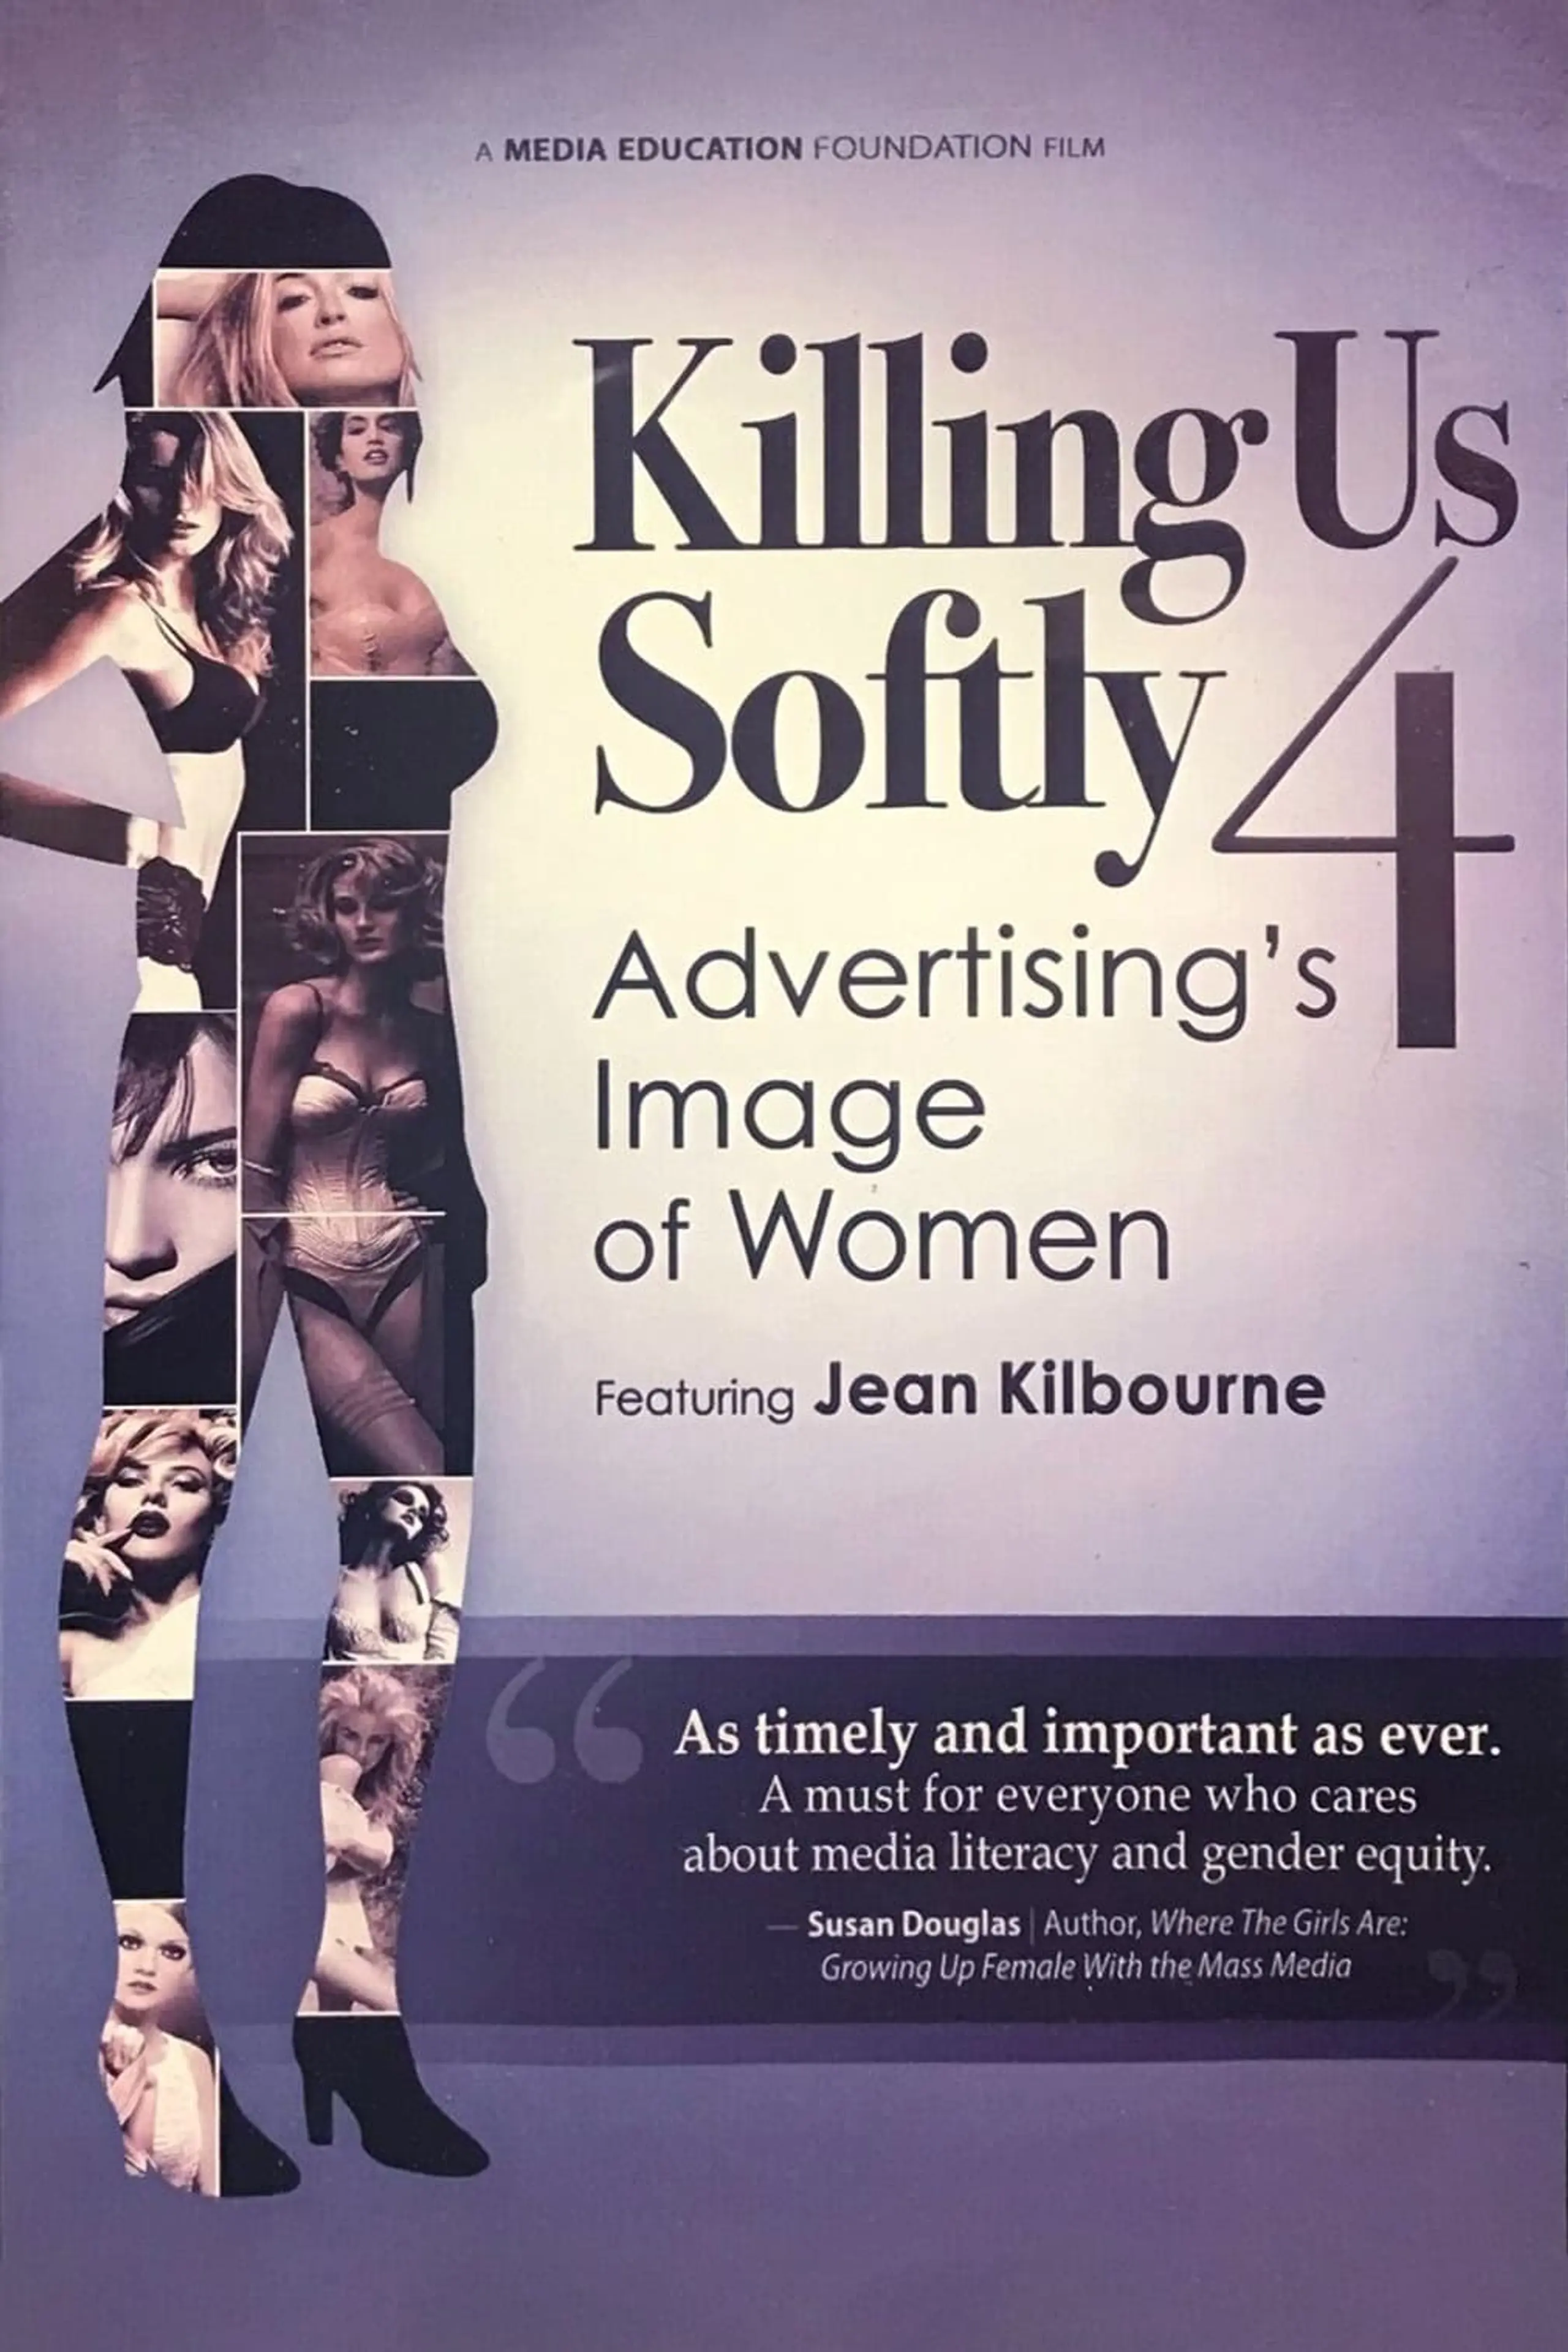 Killing Us Softly 4: Advertising's Image Of Women